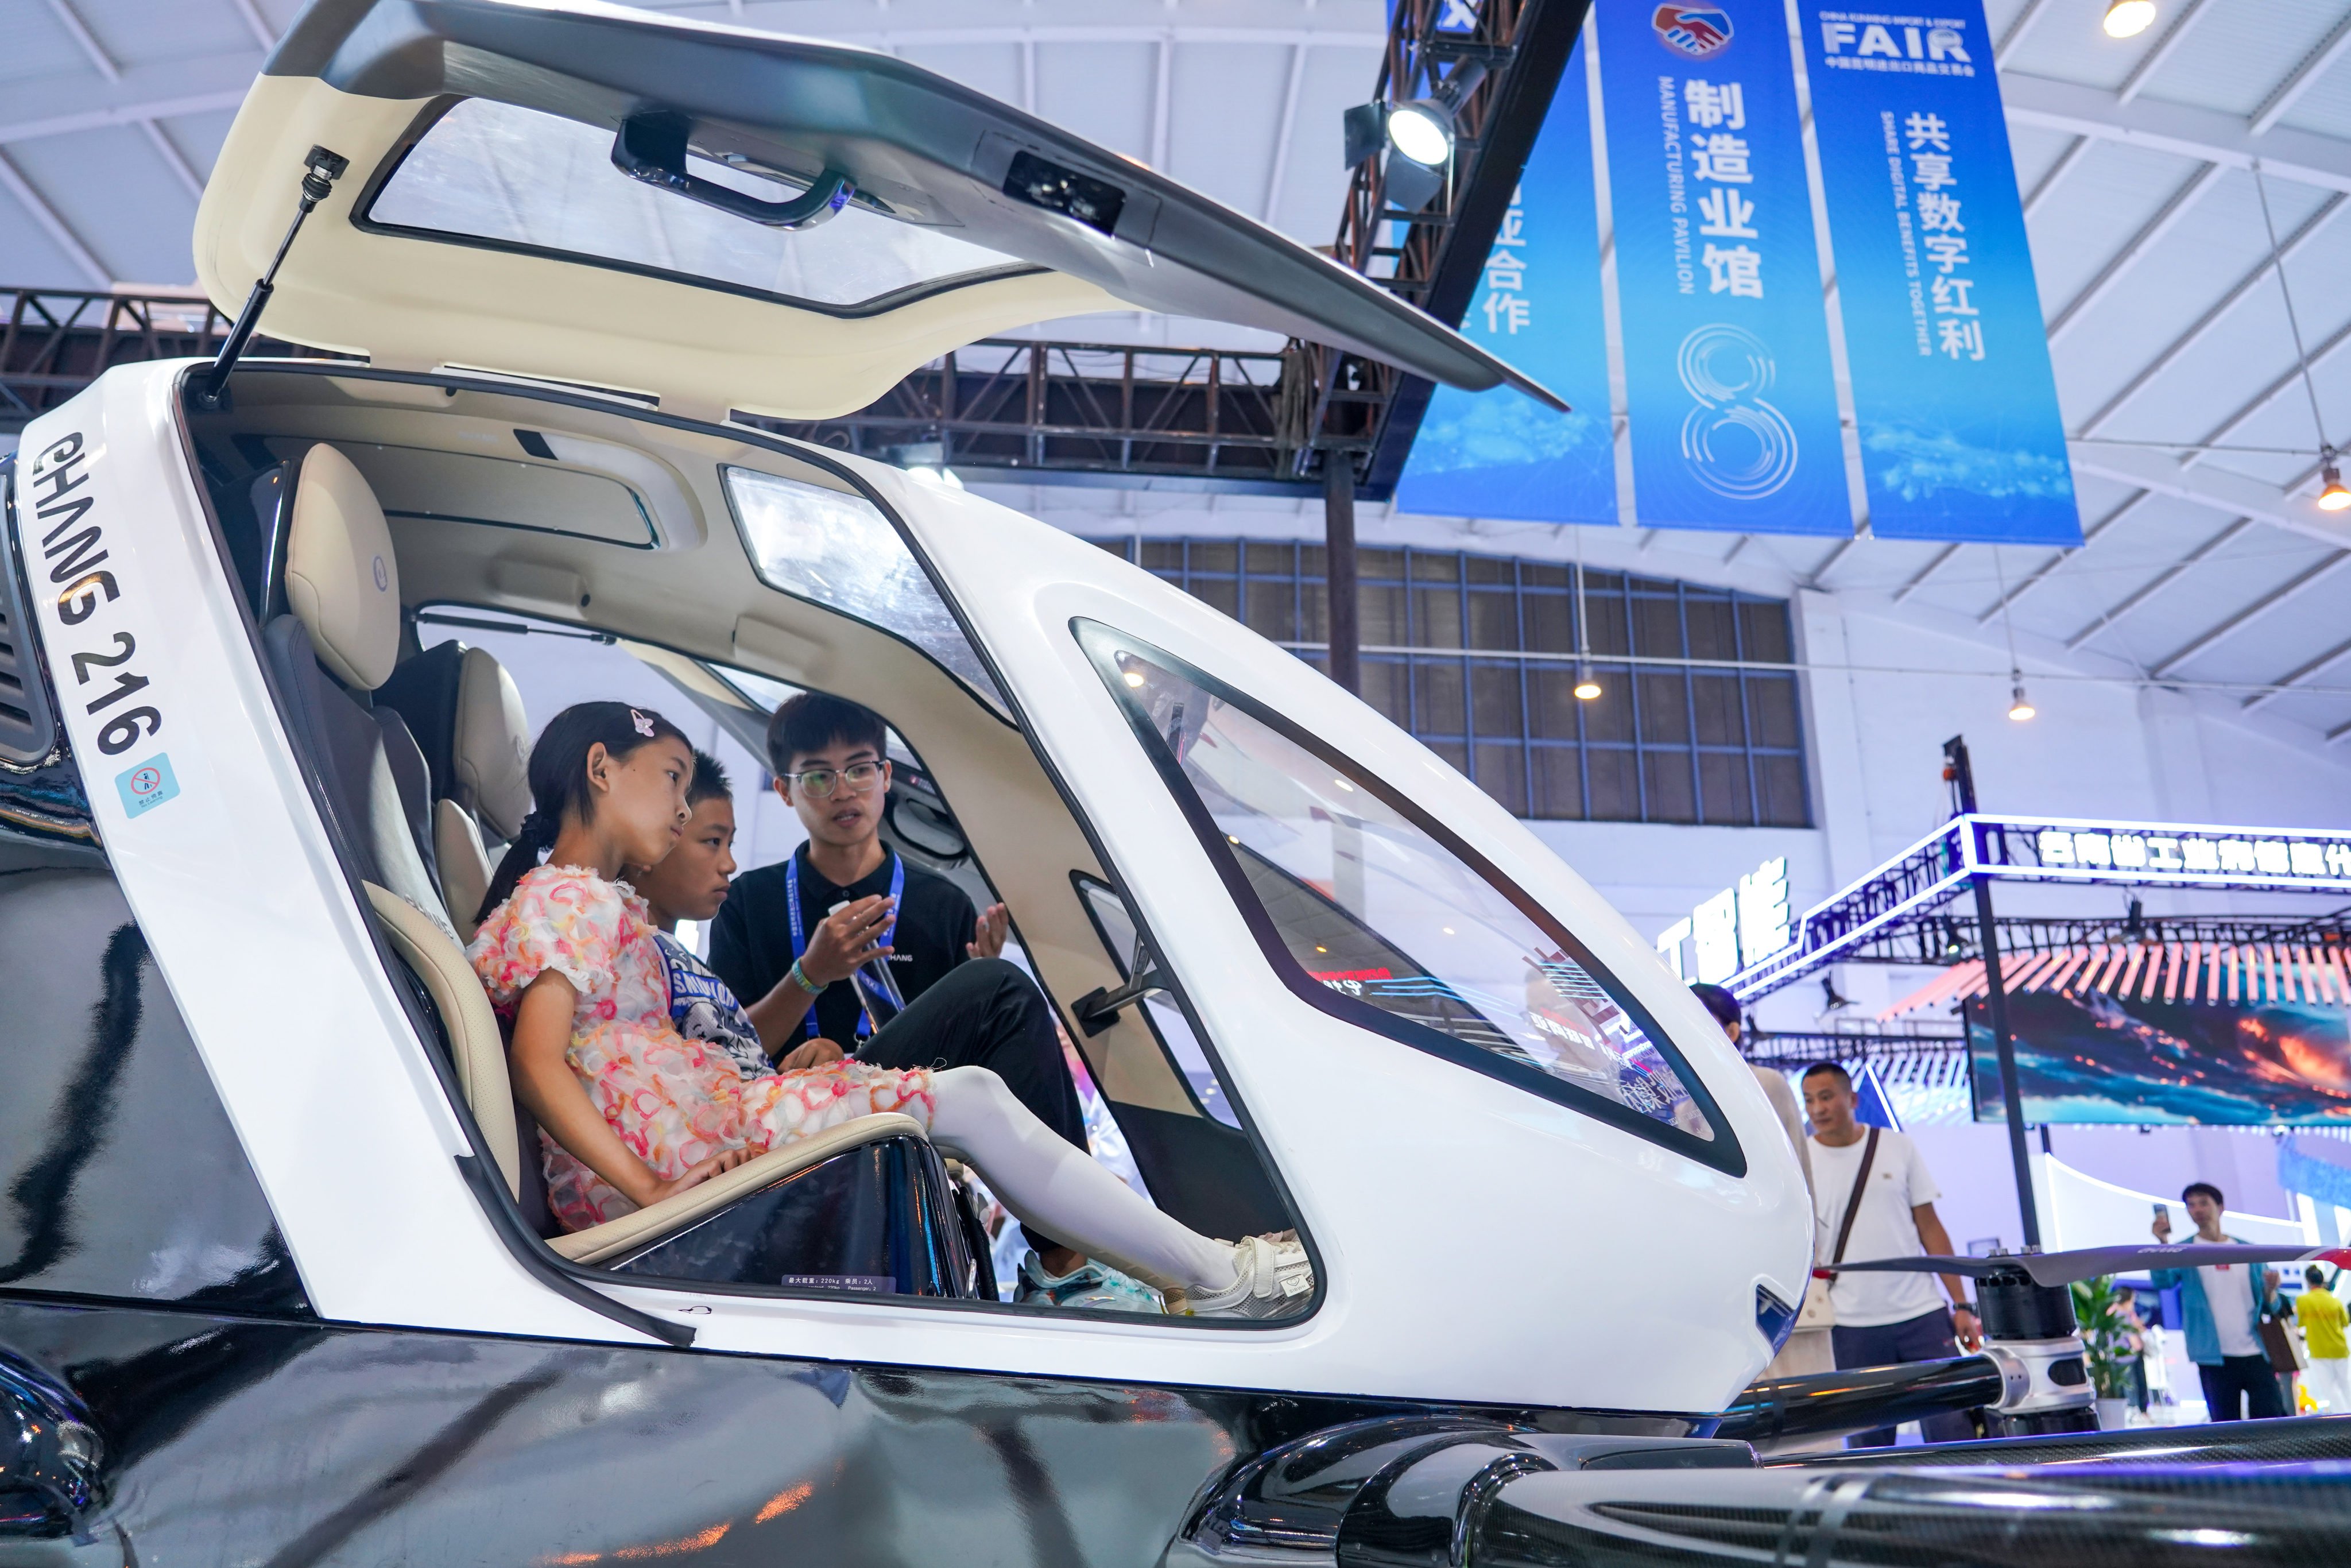 scmp.com - Mandy Zuo - Shanghai seeks AI, humanoid robotics, low-altitude economy upgrade by 2027